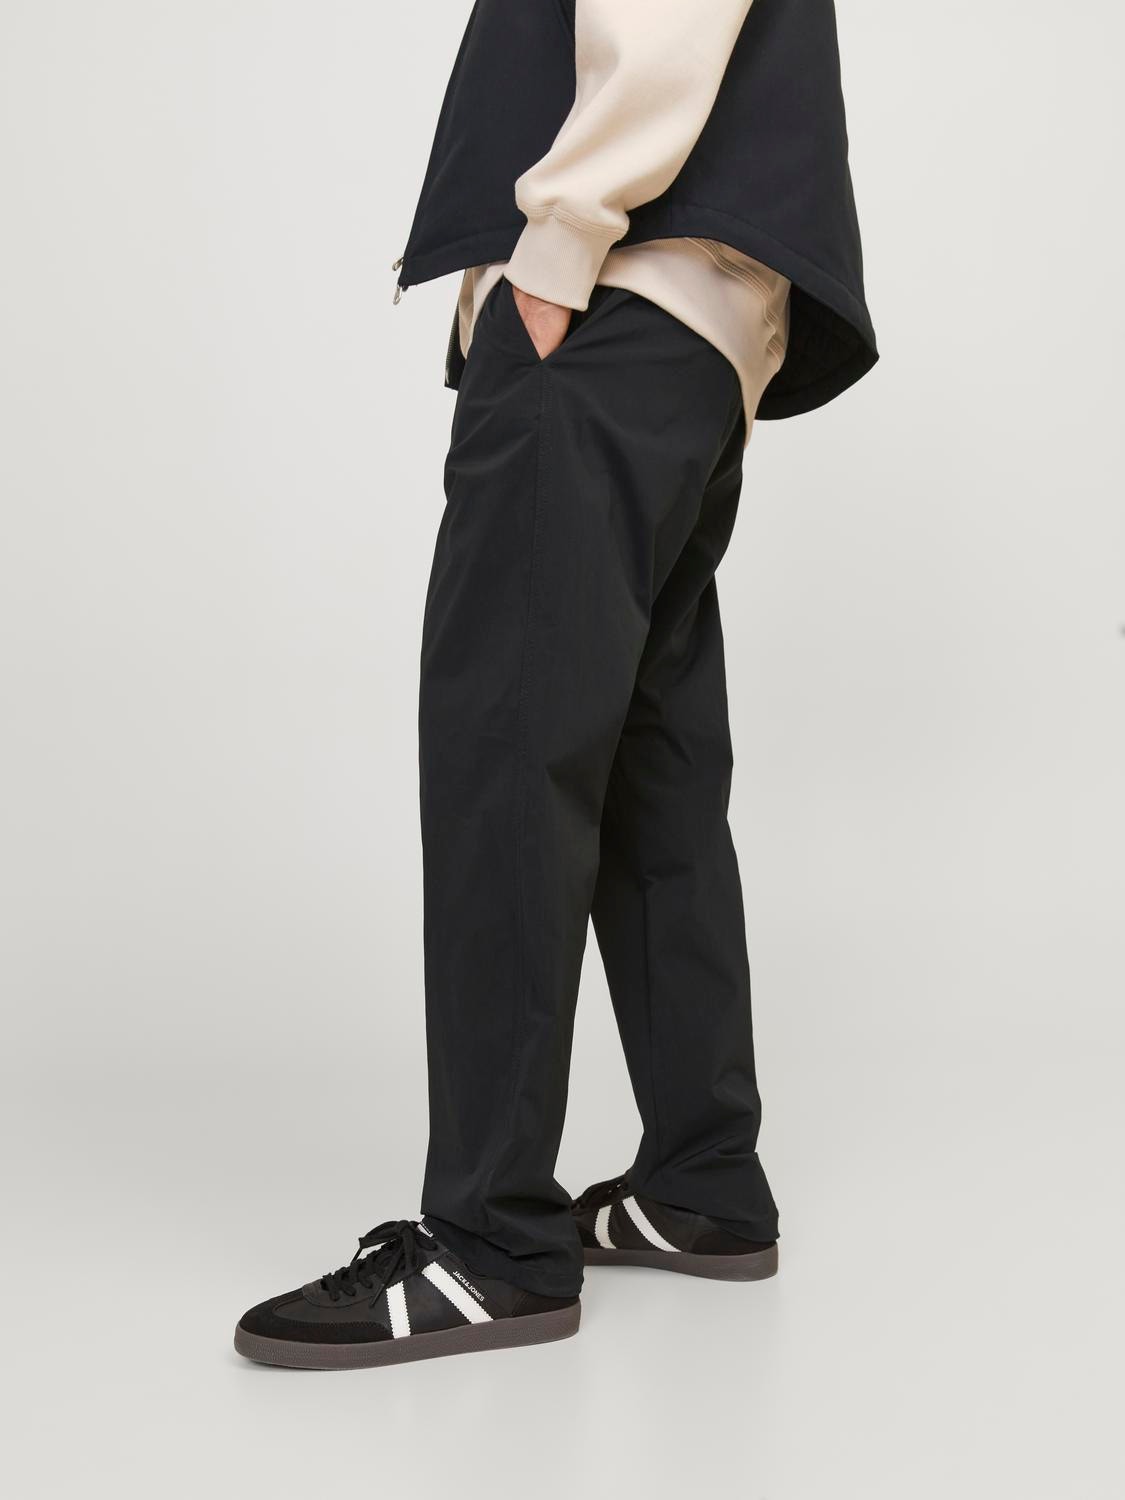 Jack & Jones Loose Fit Chino trousers -Black - 12254475